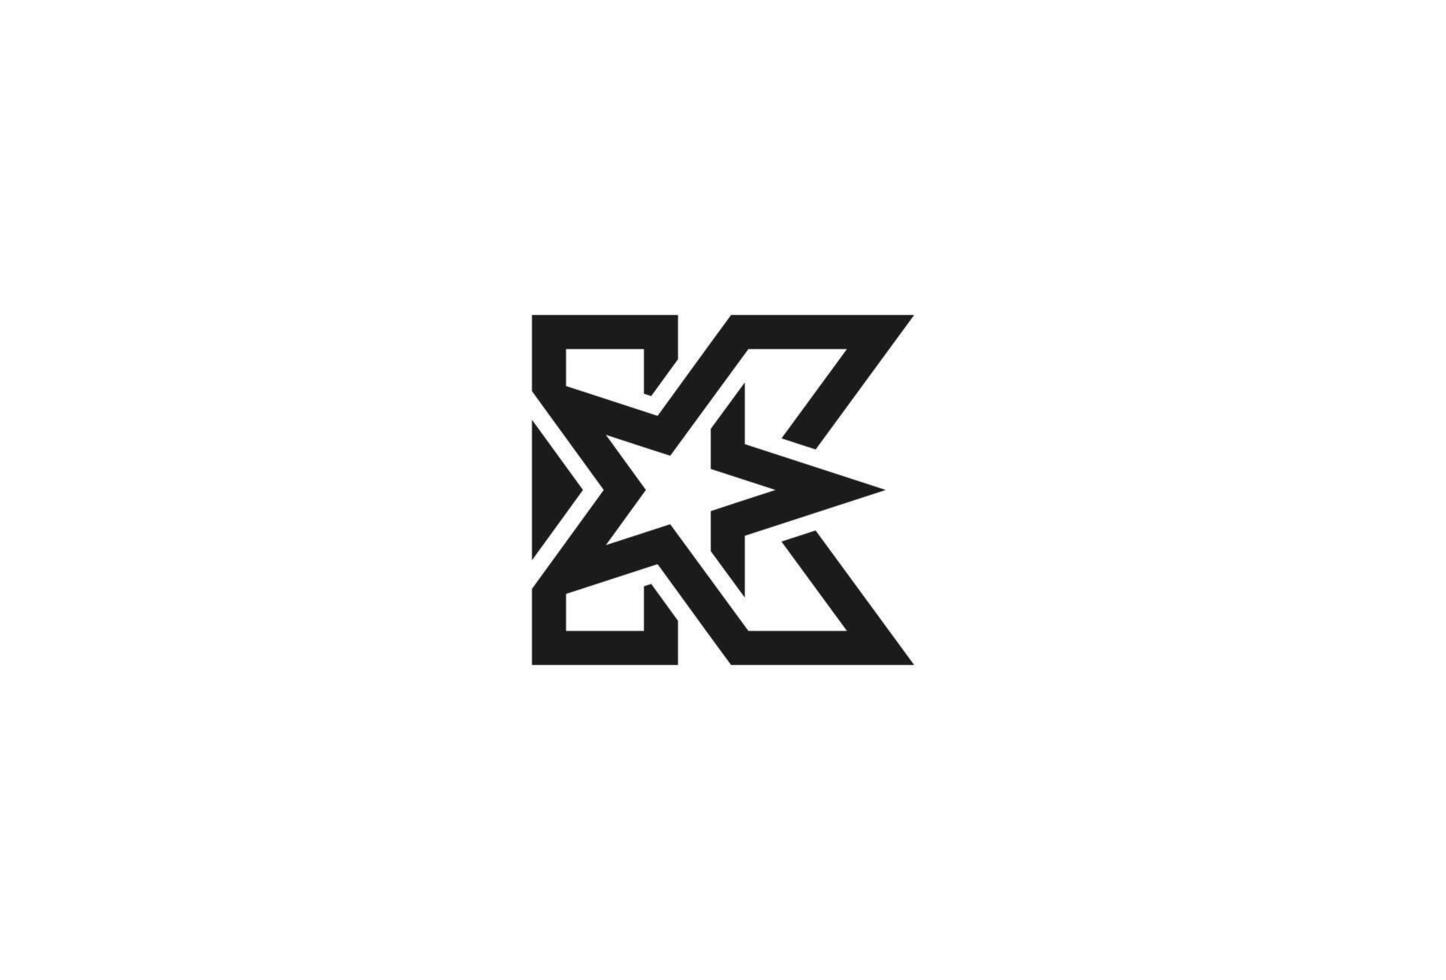 Letter K Star Logo , Letter K with Star combination , Illustration vector